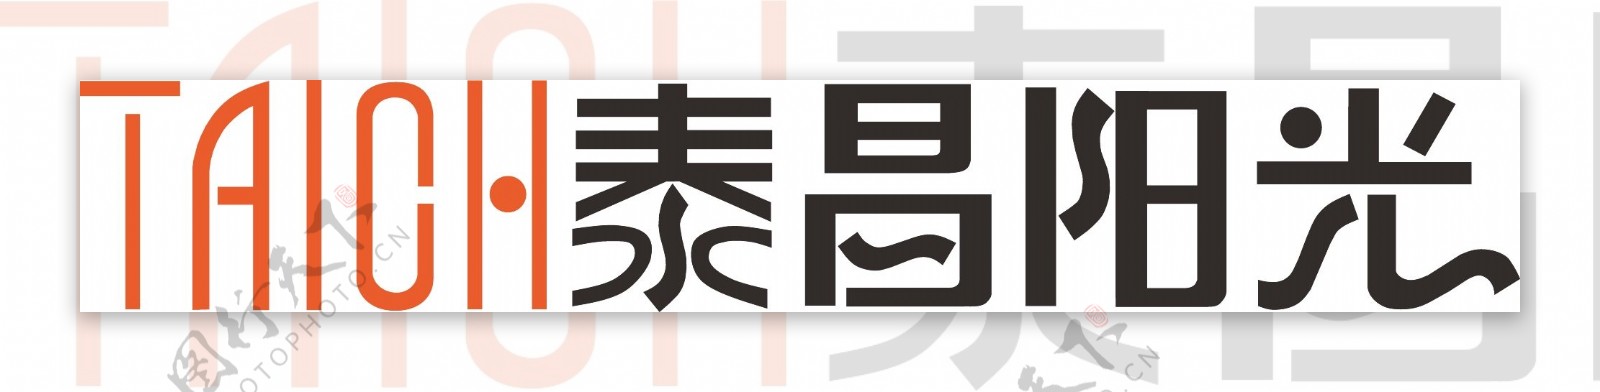 泰昌阳光logo